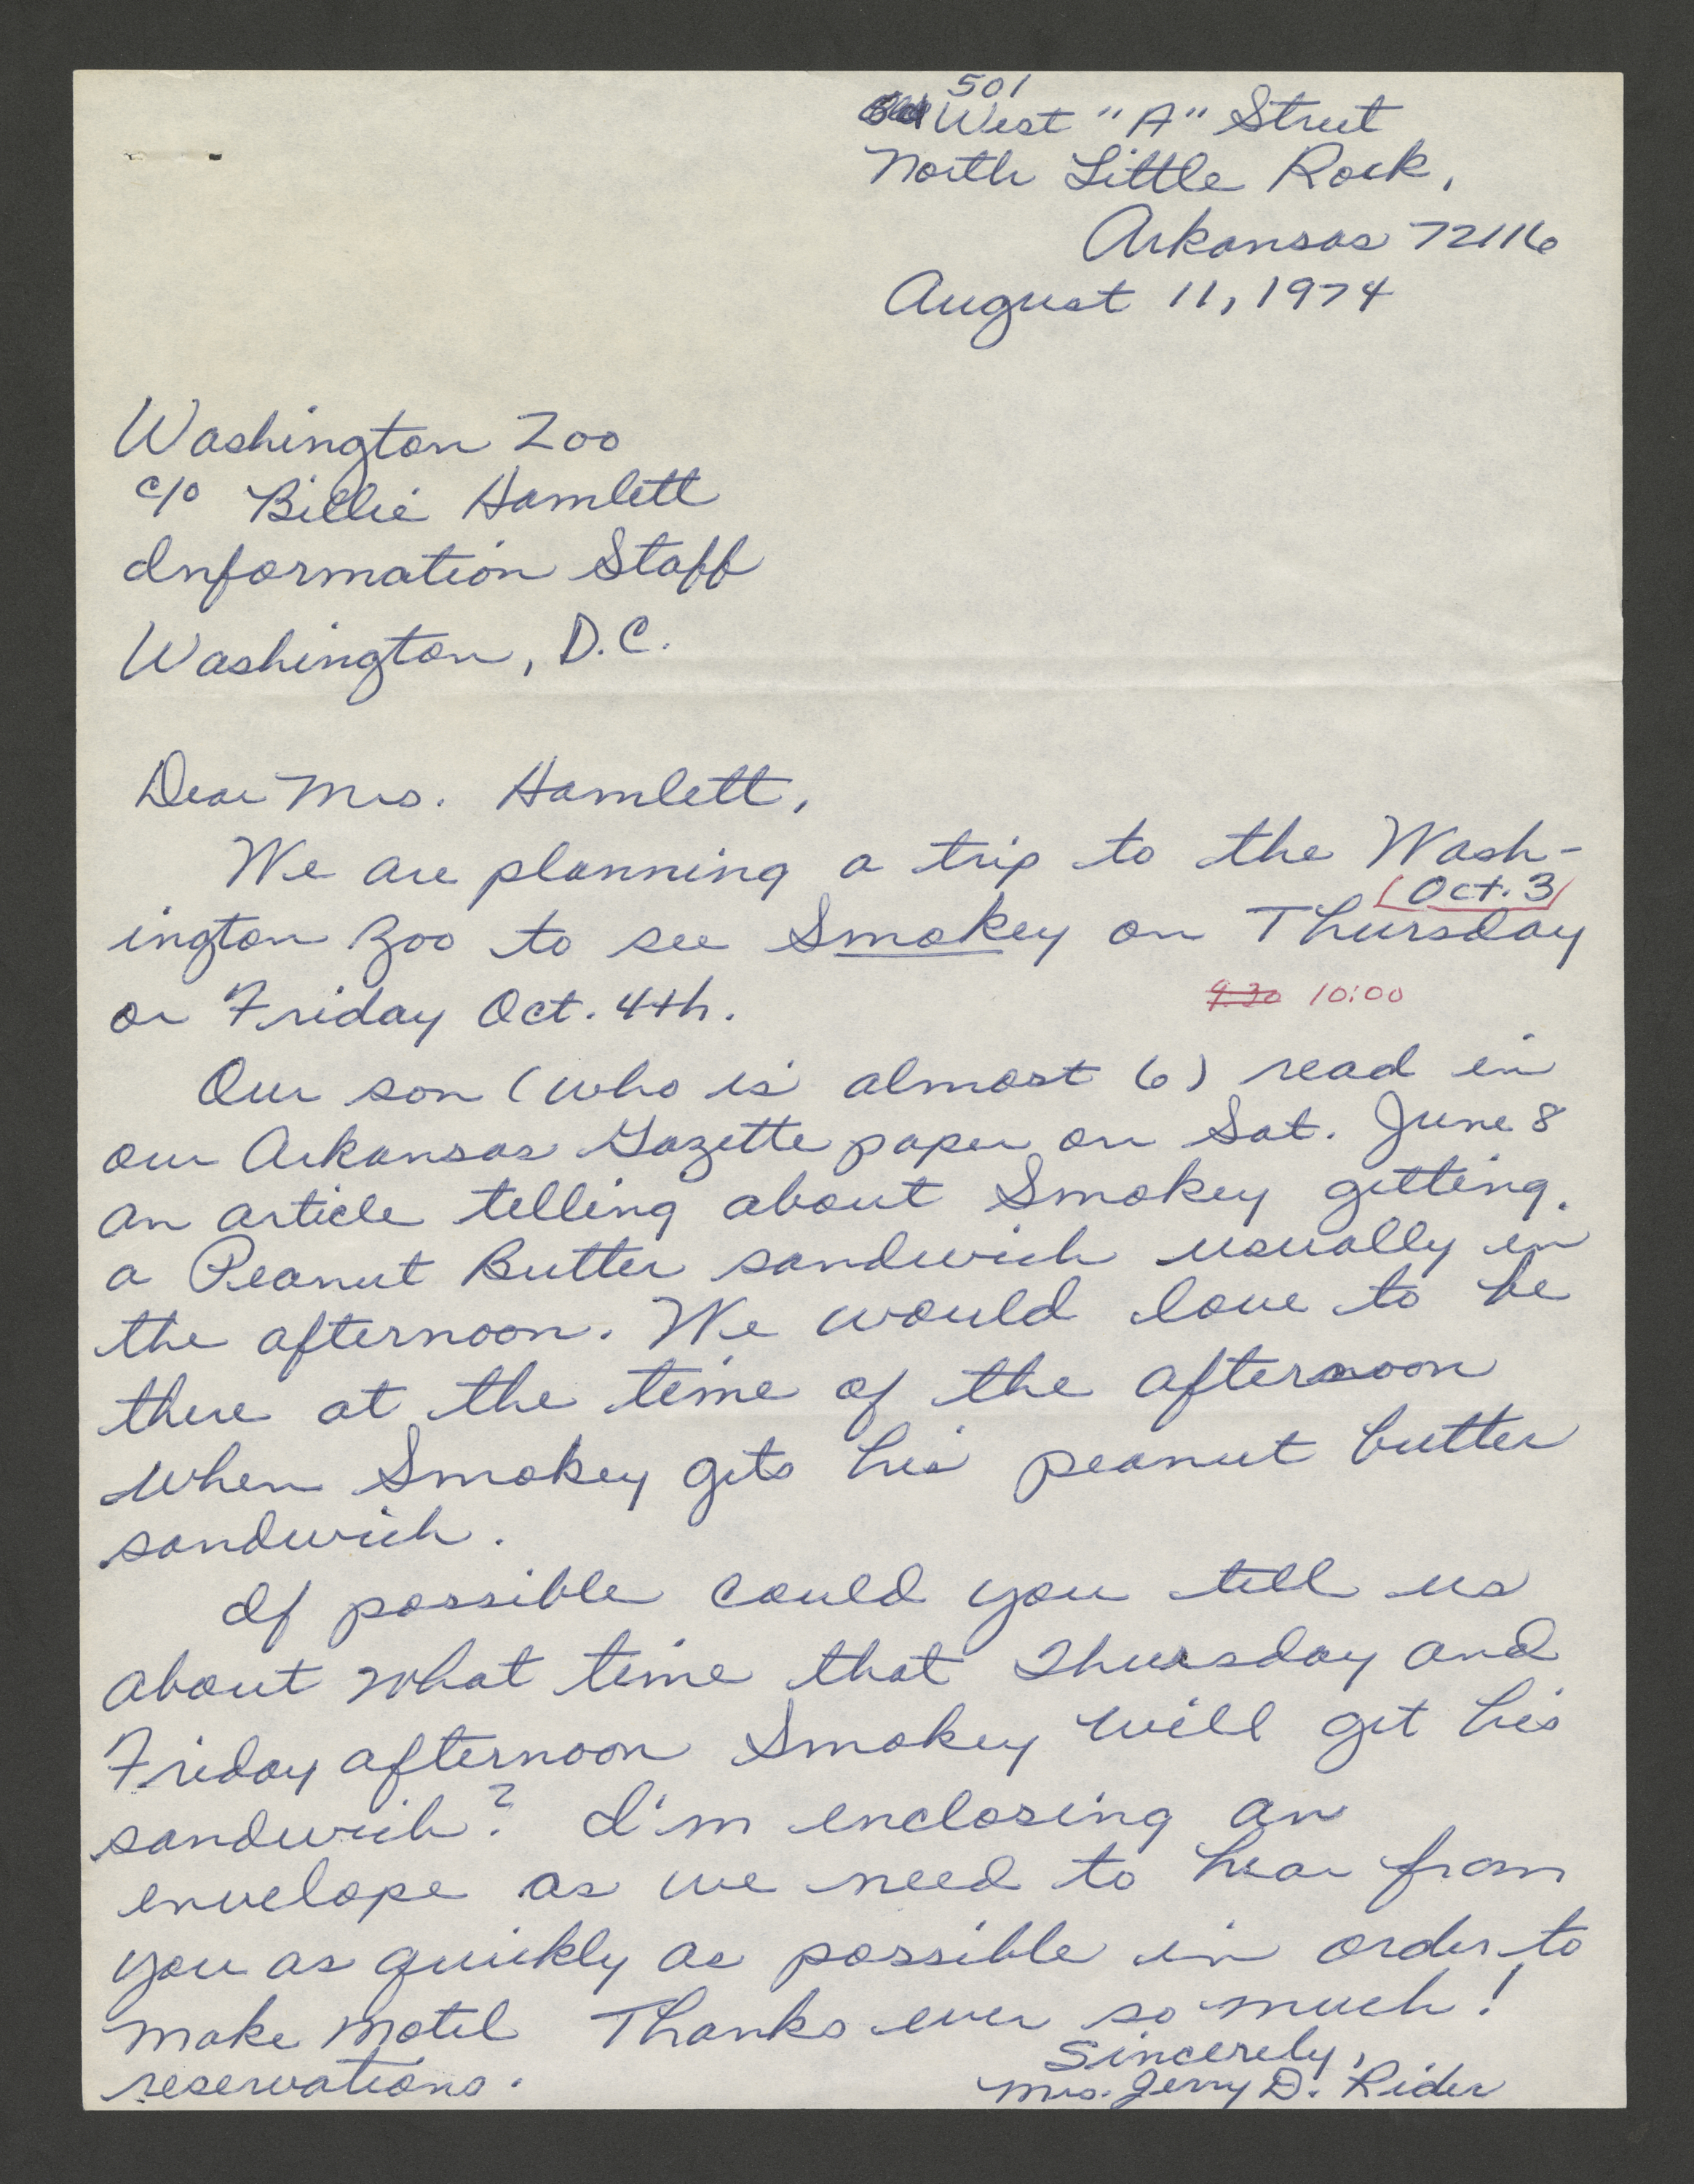 Handwritten letter from Mrs. Jerry D. Rider.